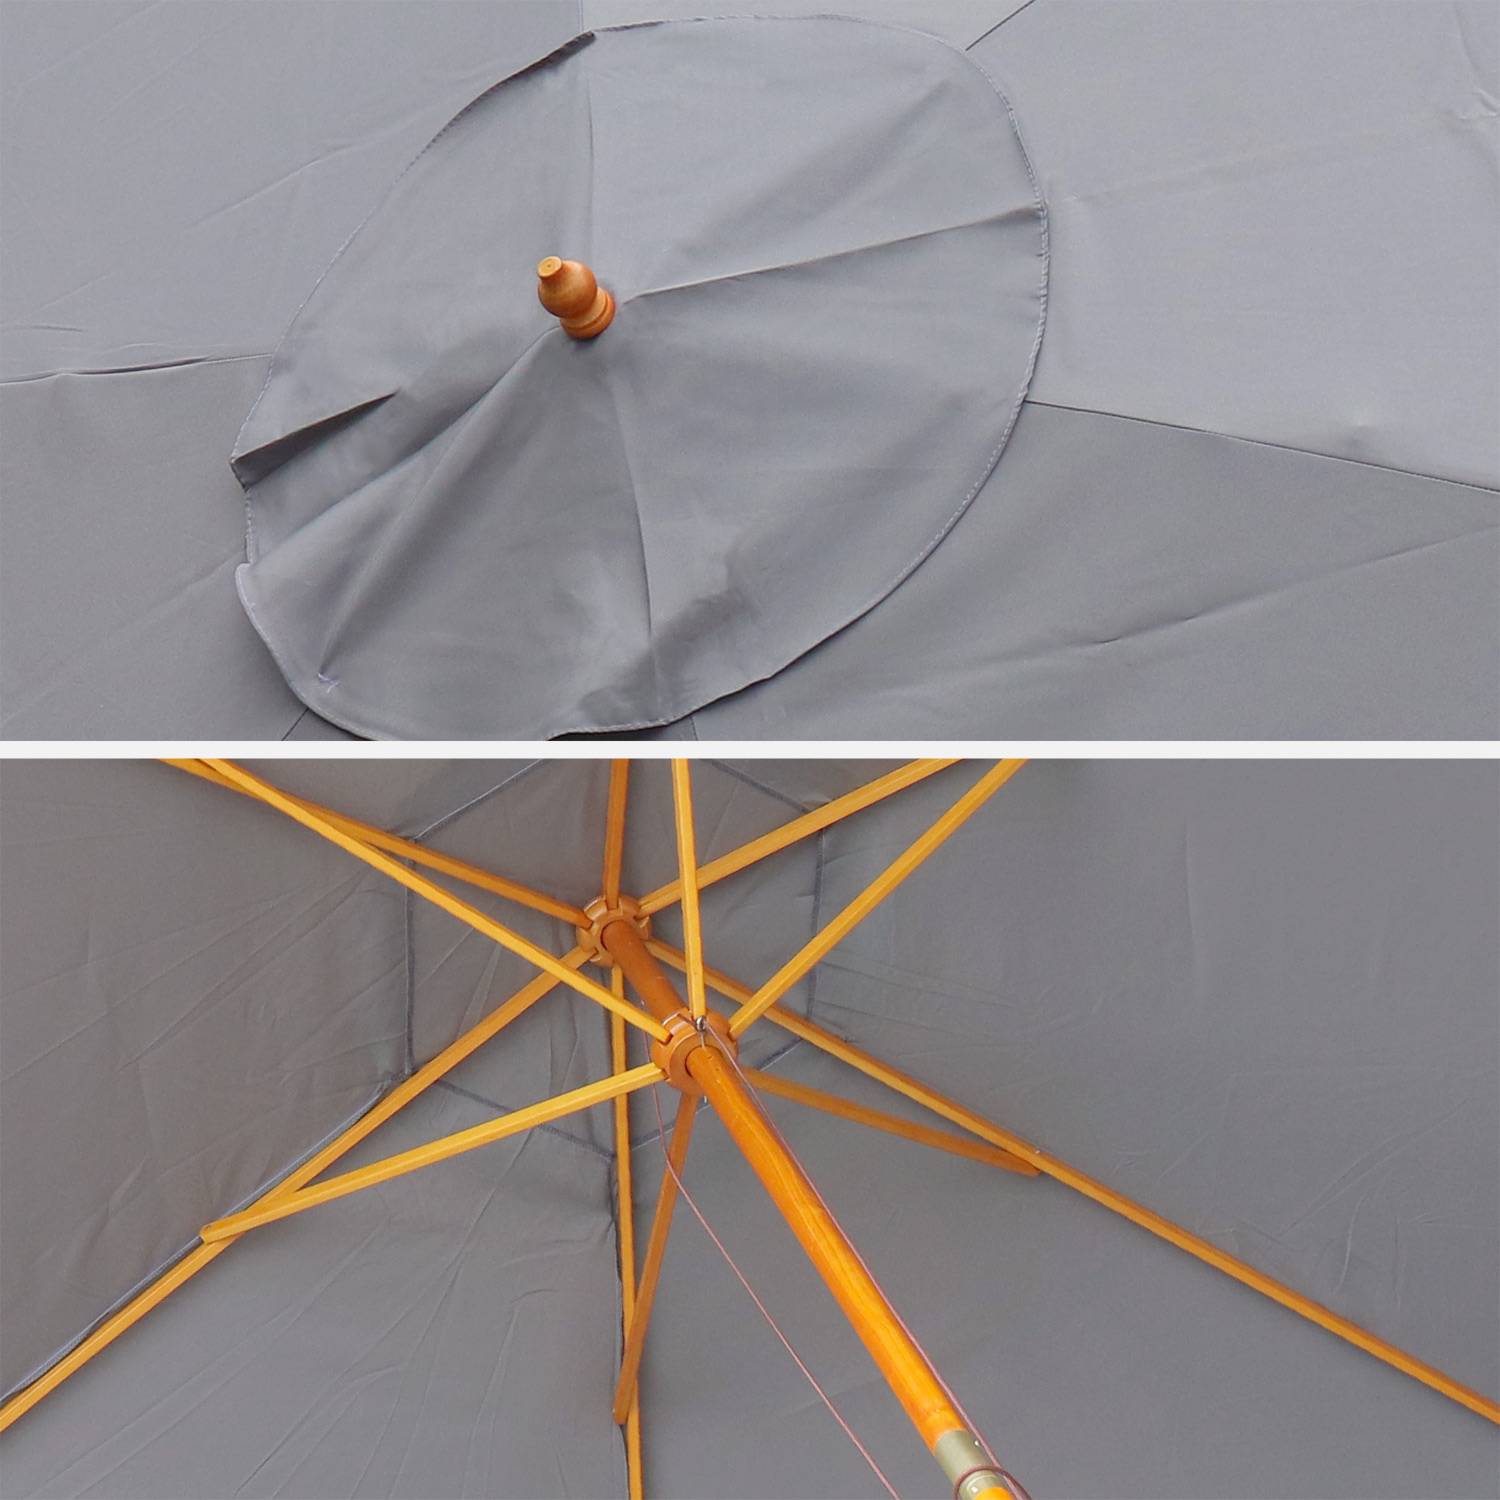 Parasol redondo de madera 3m - Cabourg Gris - mástil central de madera, Ø300cm, sistema de apertura manual, polea,sweeek,Photo4